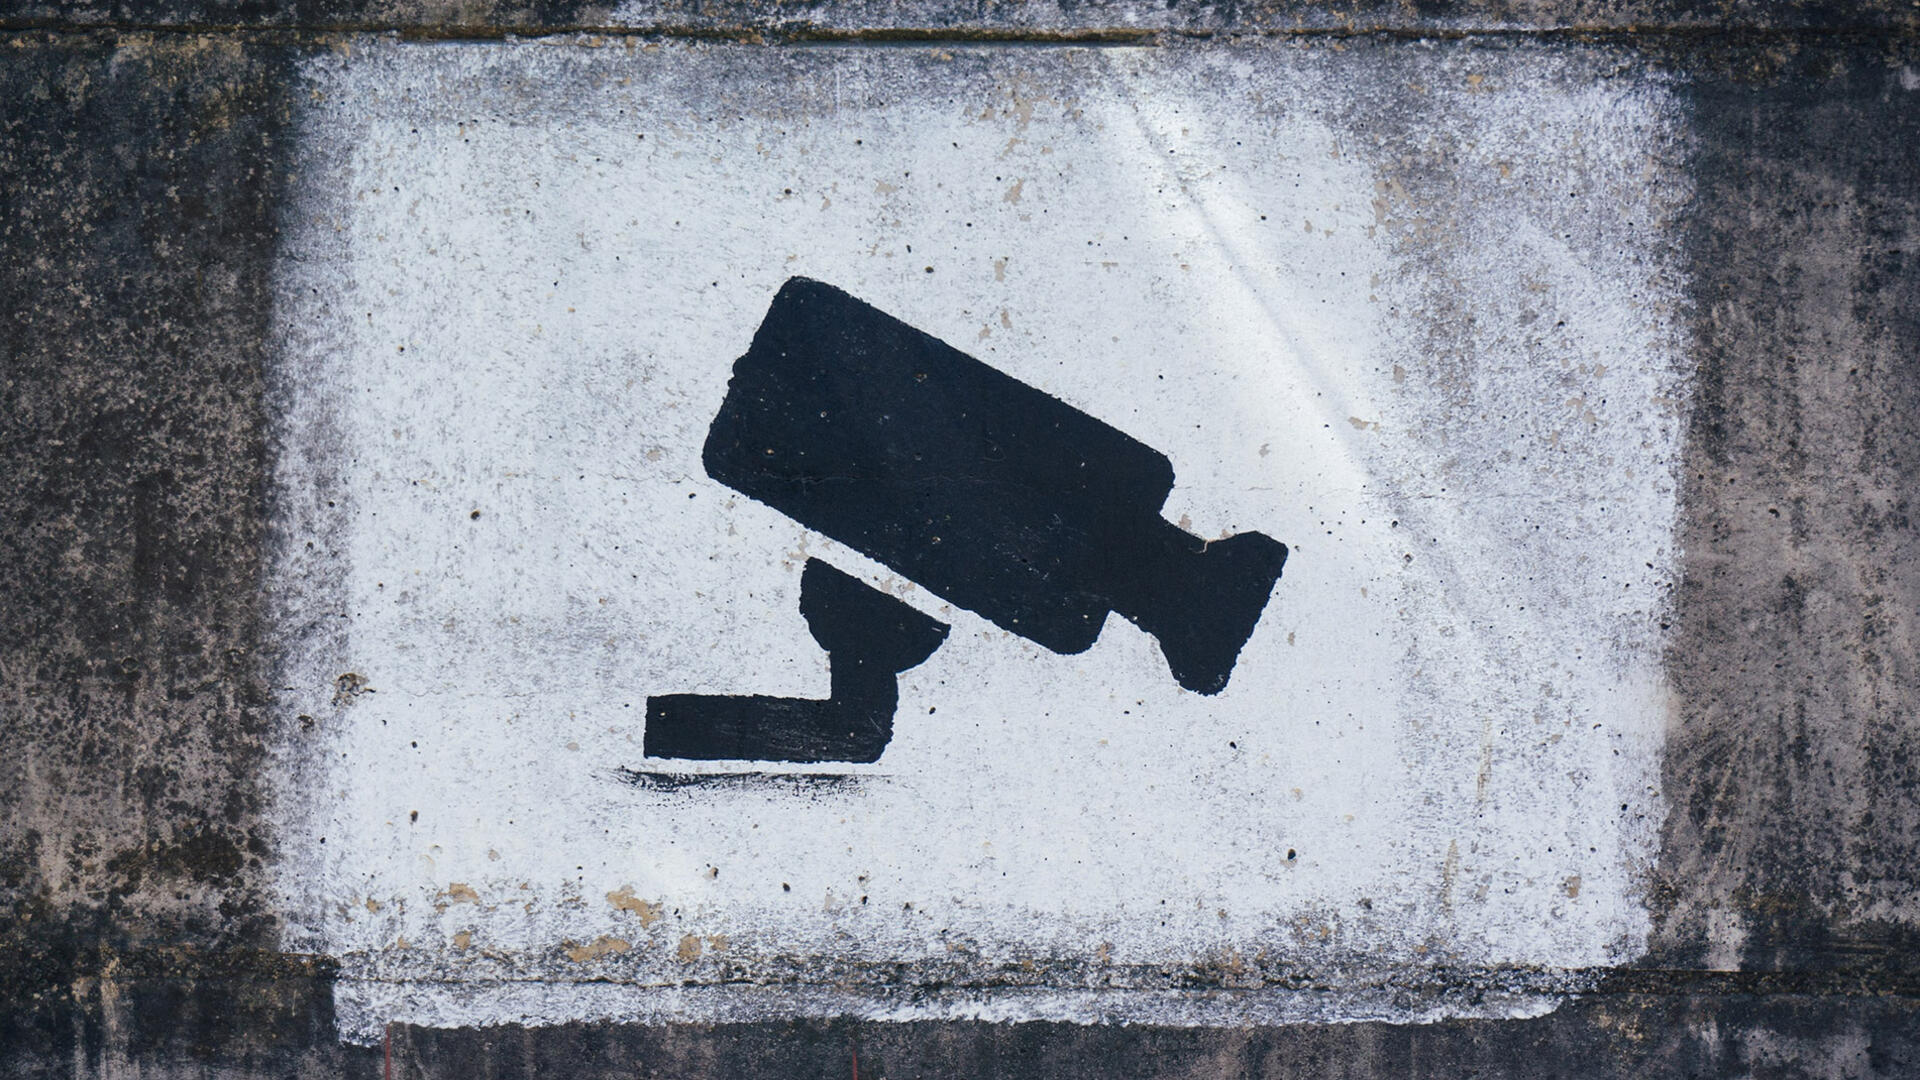 Spraypainted surveillance camera